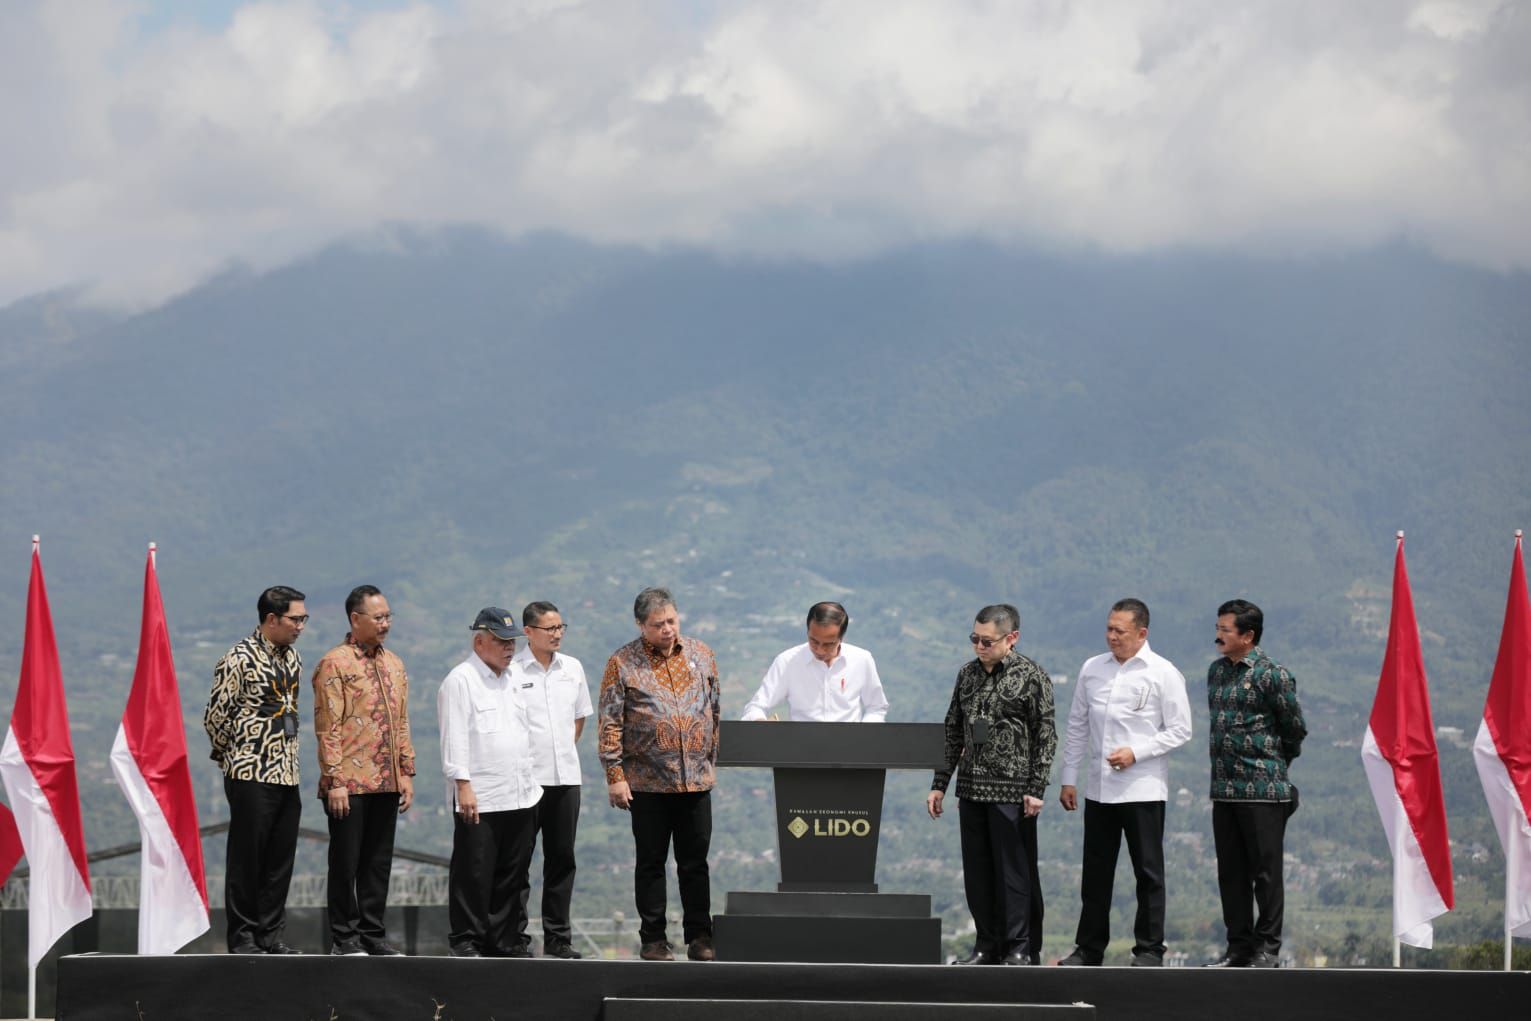 Presiden Jokowi meresmikan Kawasan Ekonomi Khusus (KEK) Lido, Jumat 31 Maret 2023.